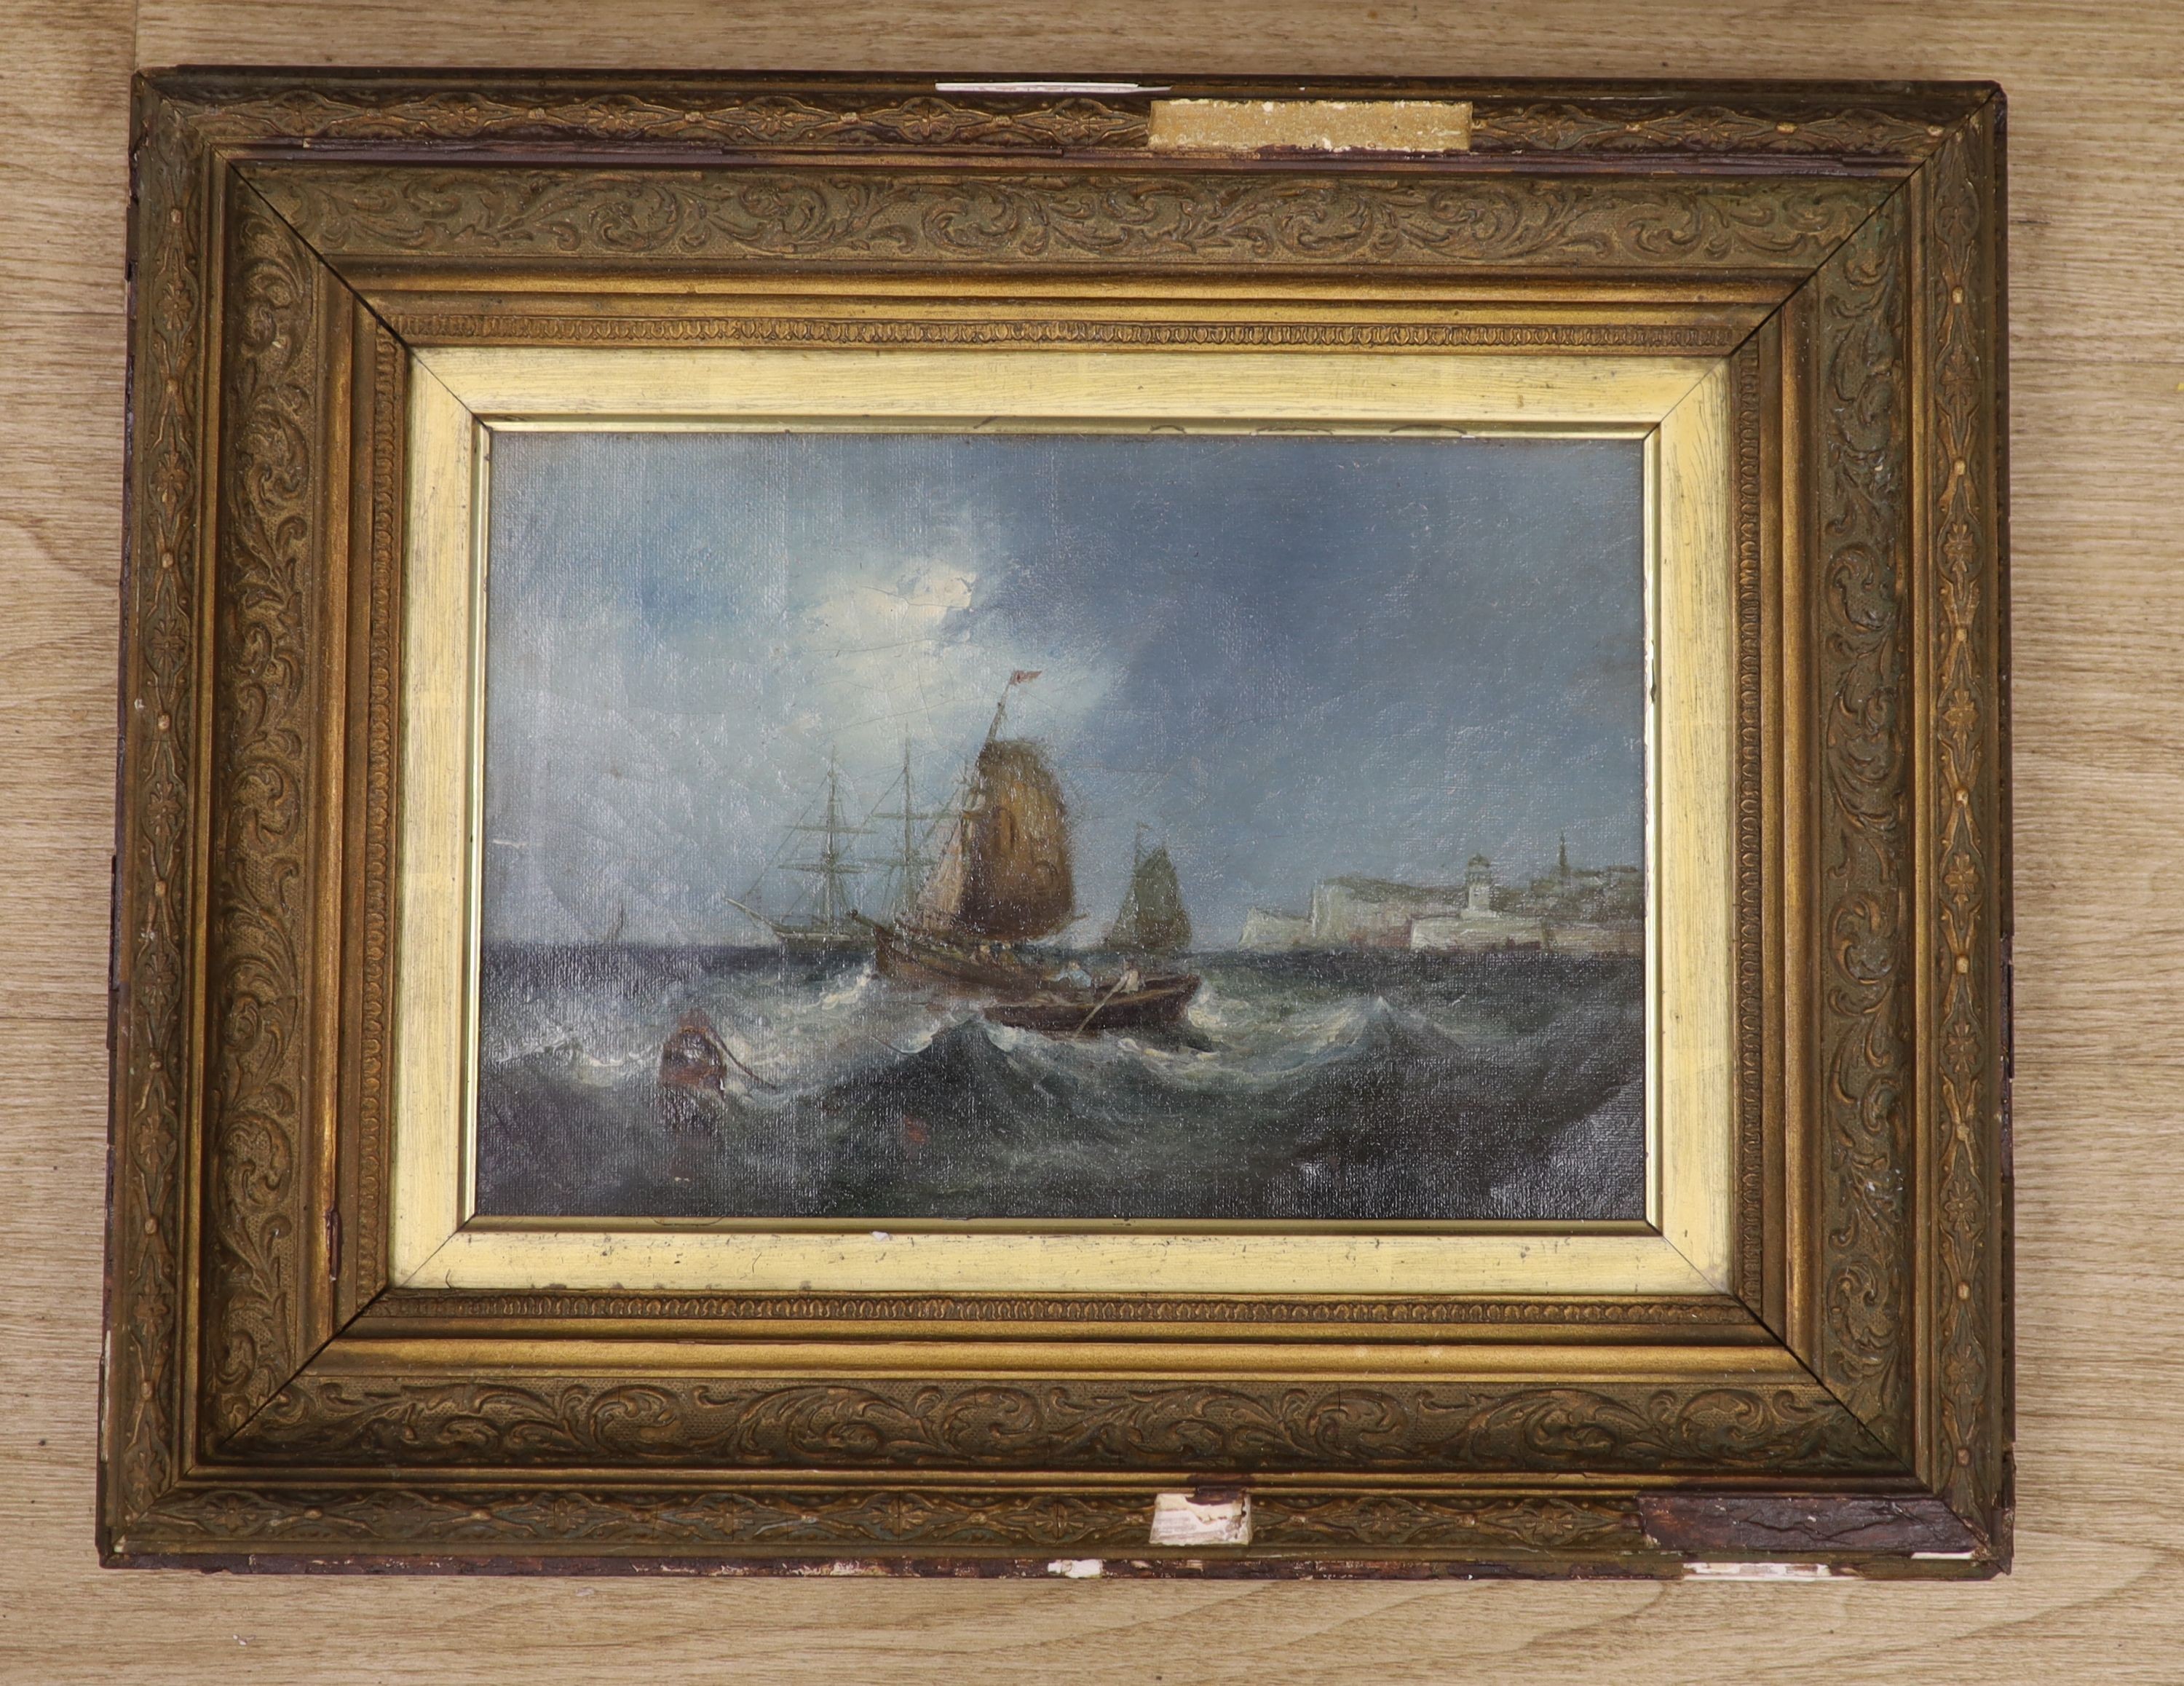 19th century English School, oil on canvas, Shipping off the coast, 19 x 28cm